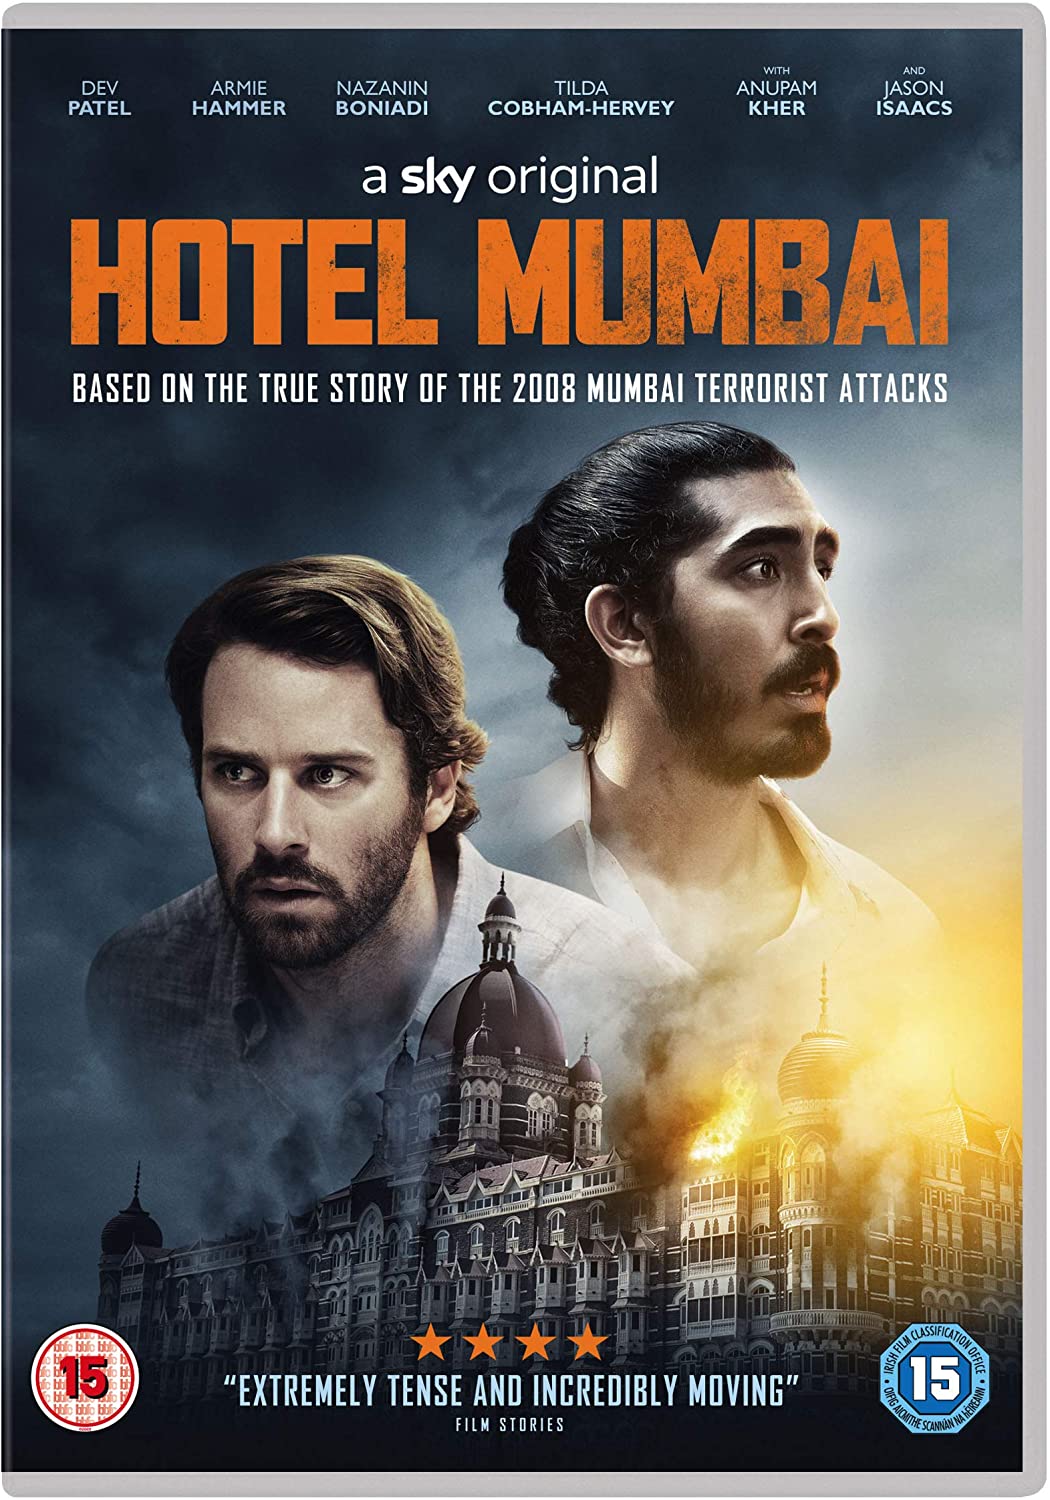 Hotel Mumbai - Drama/Action Thriller [DVD]